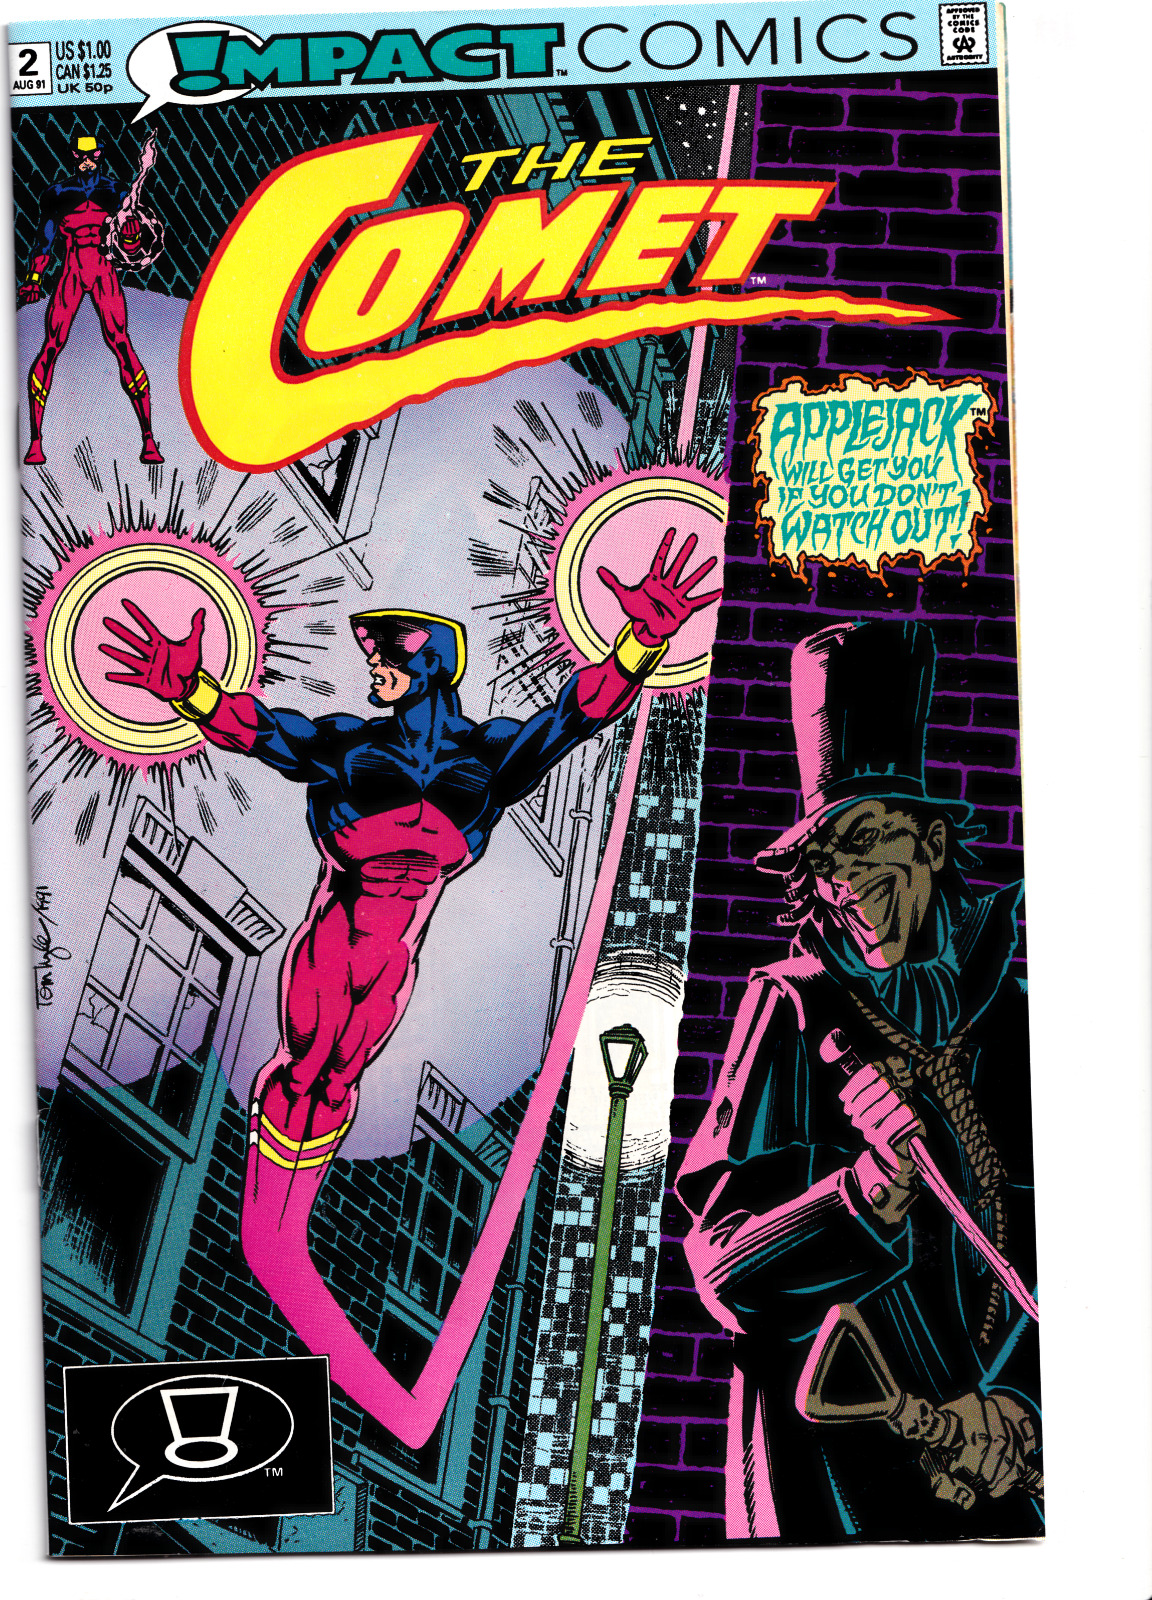 The Comet #2 1991 DC Comics (Impact)